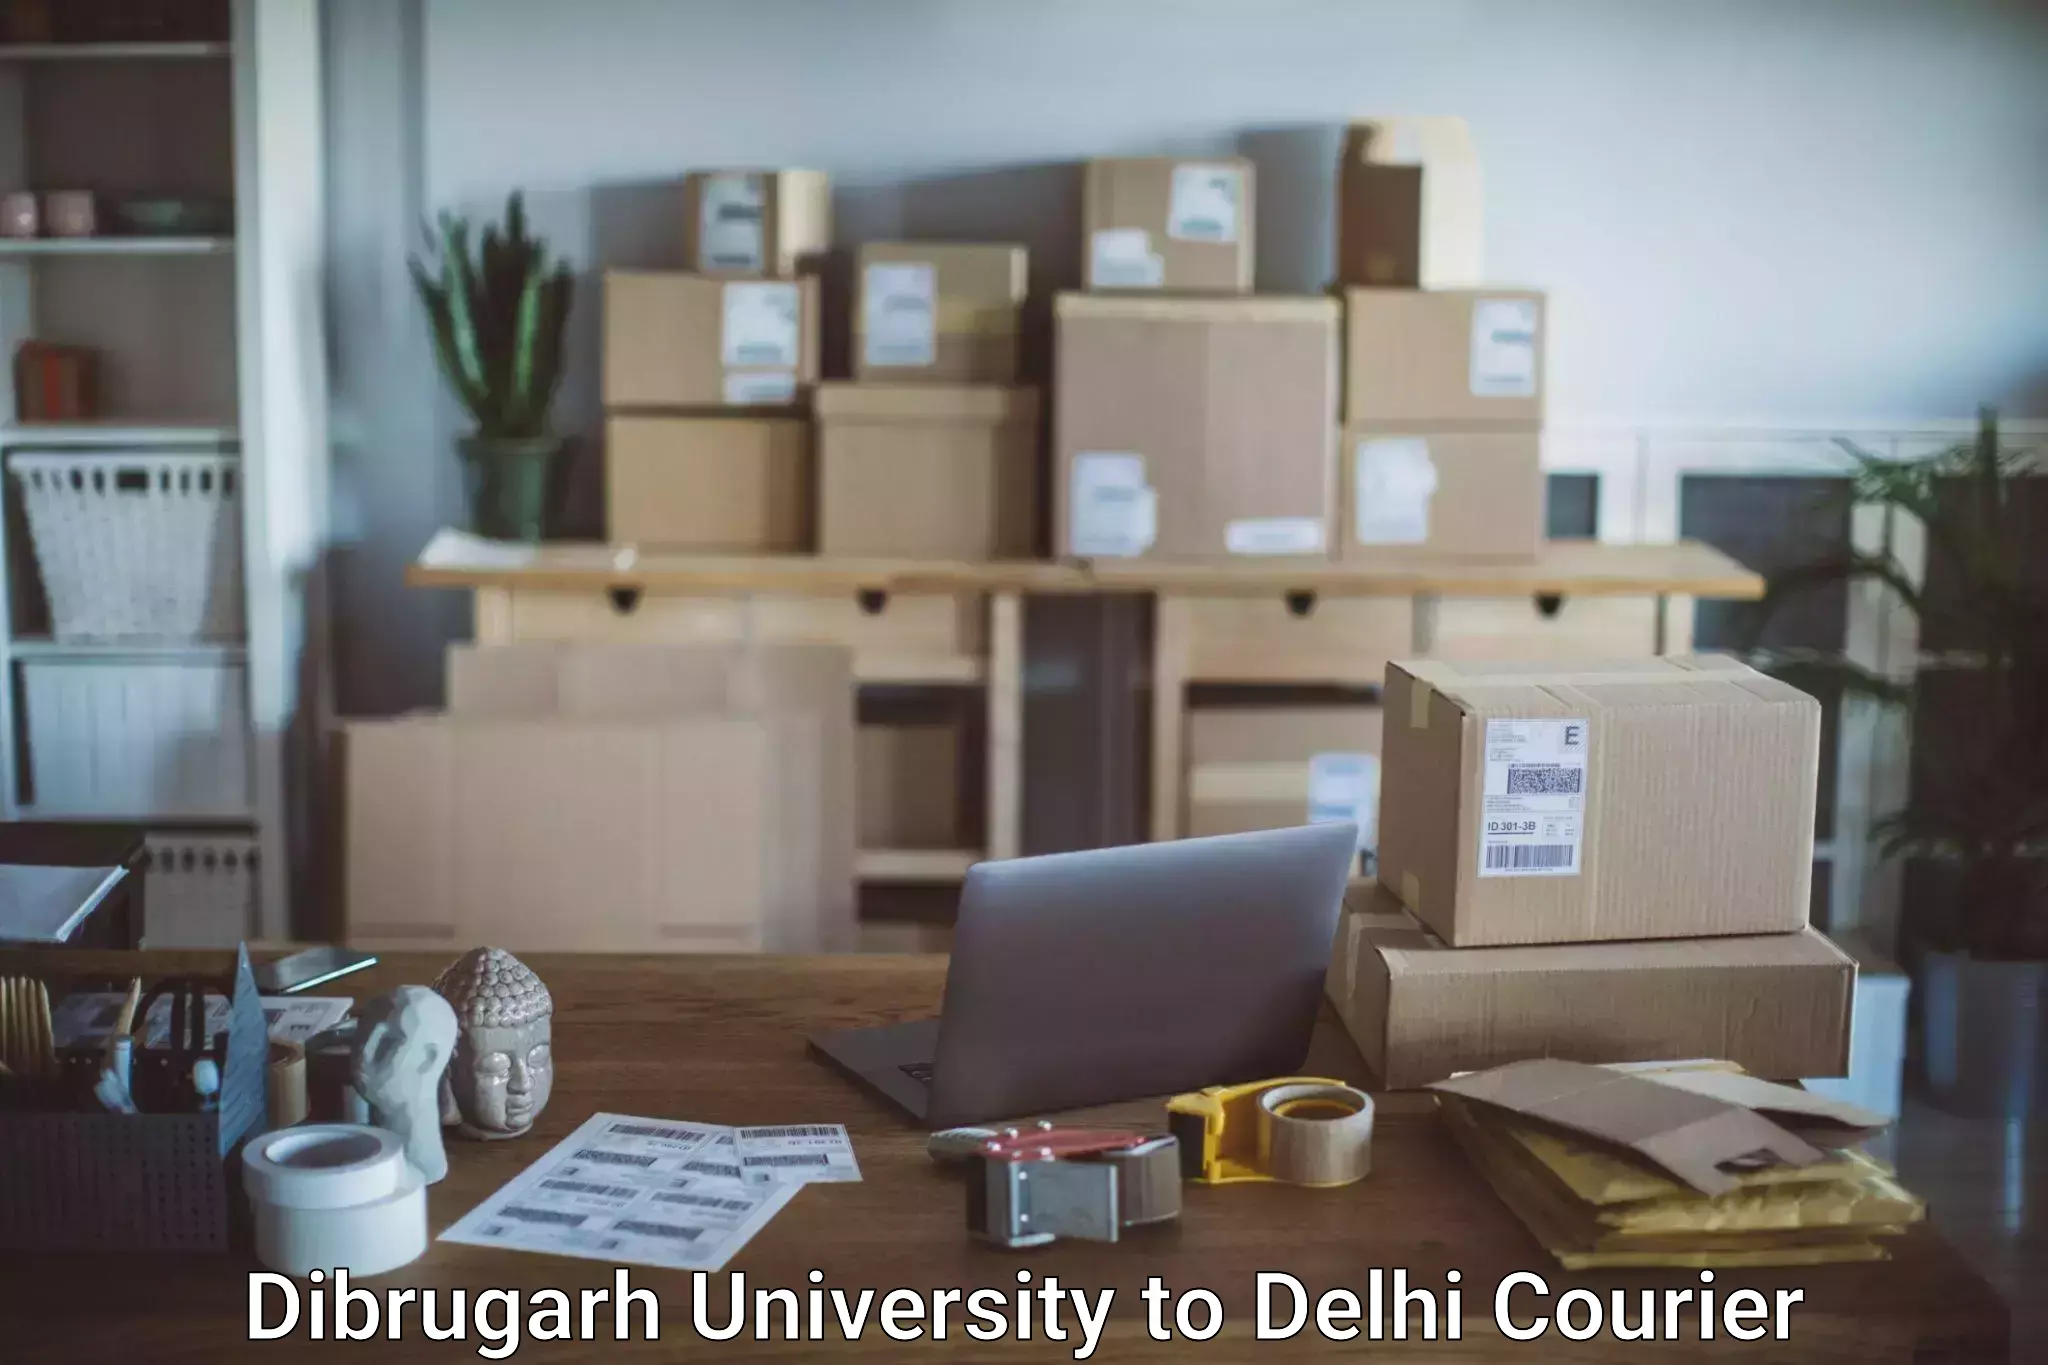 Baggage relocation service Dibrugarh University to IIT Delhi